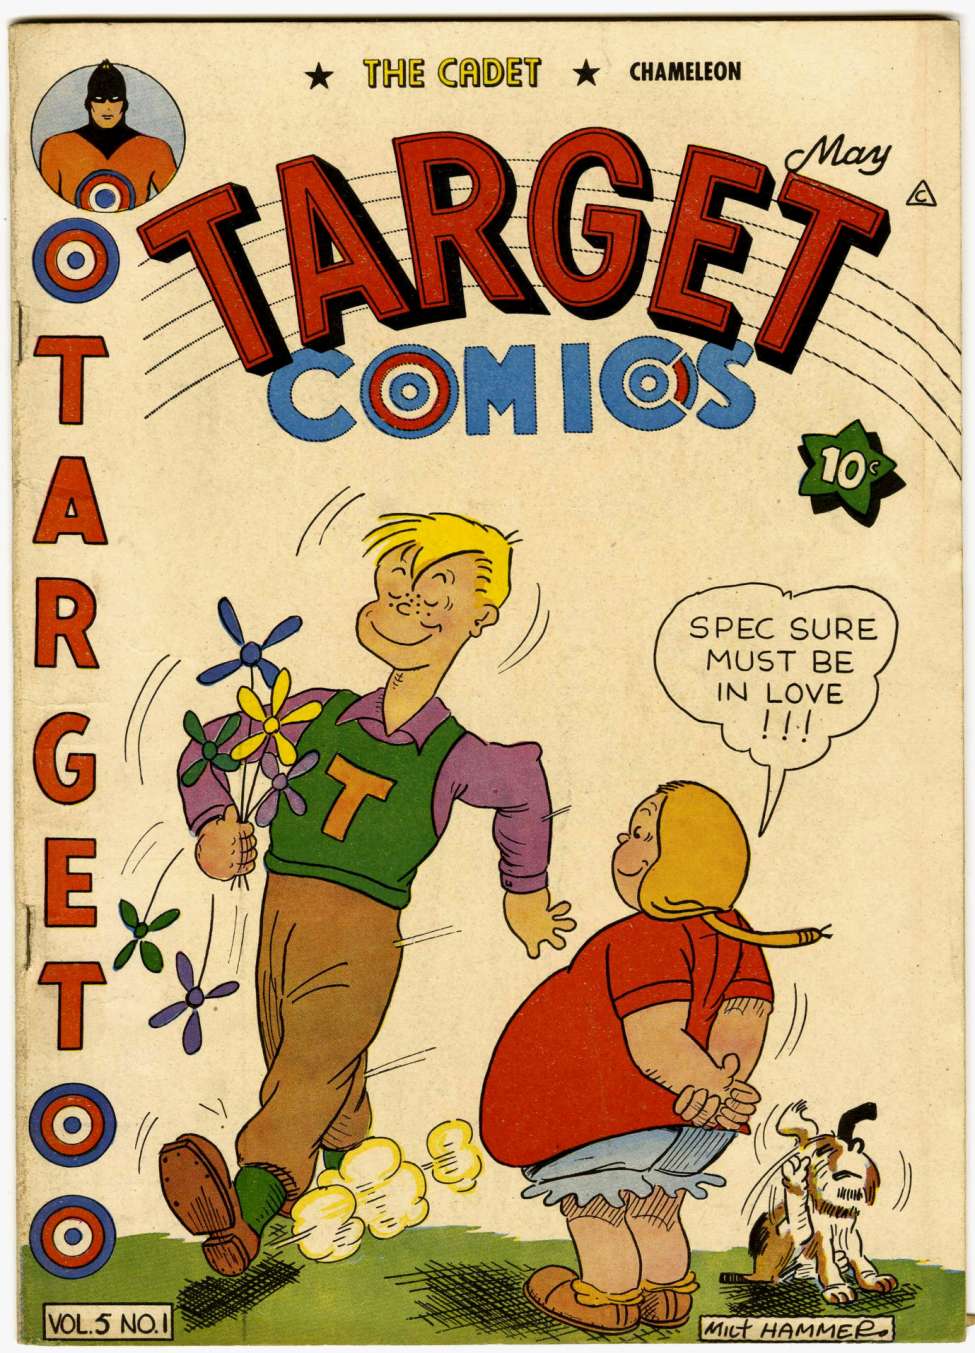 Comic Book Cover For Target Comics v5 1